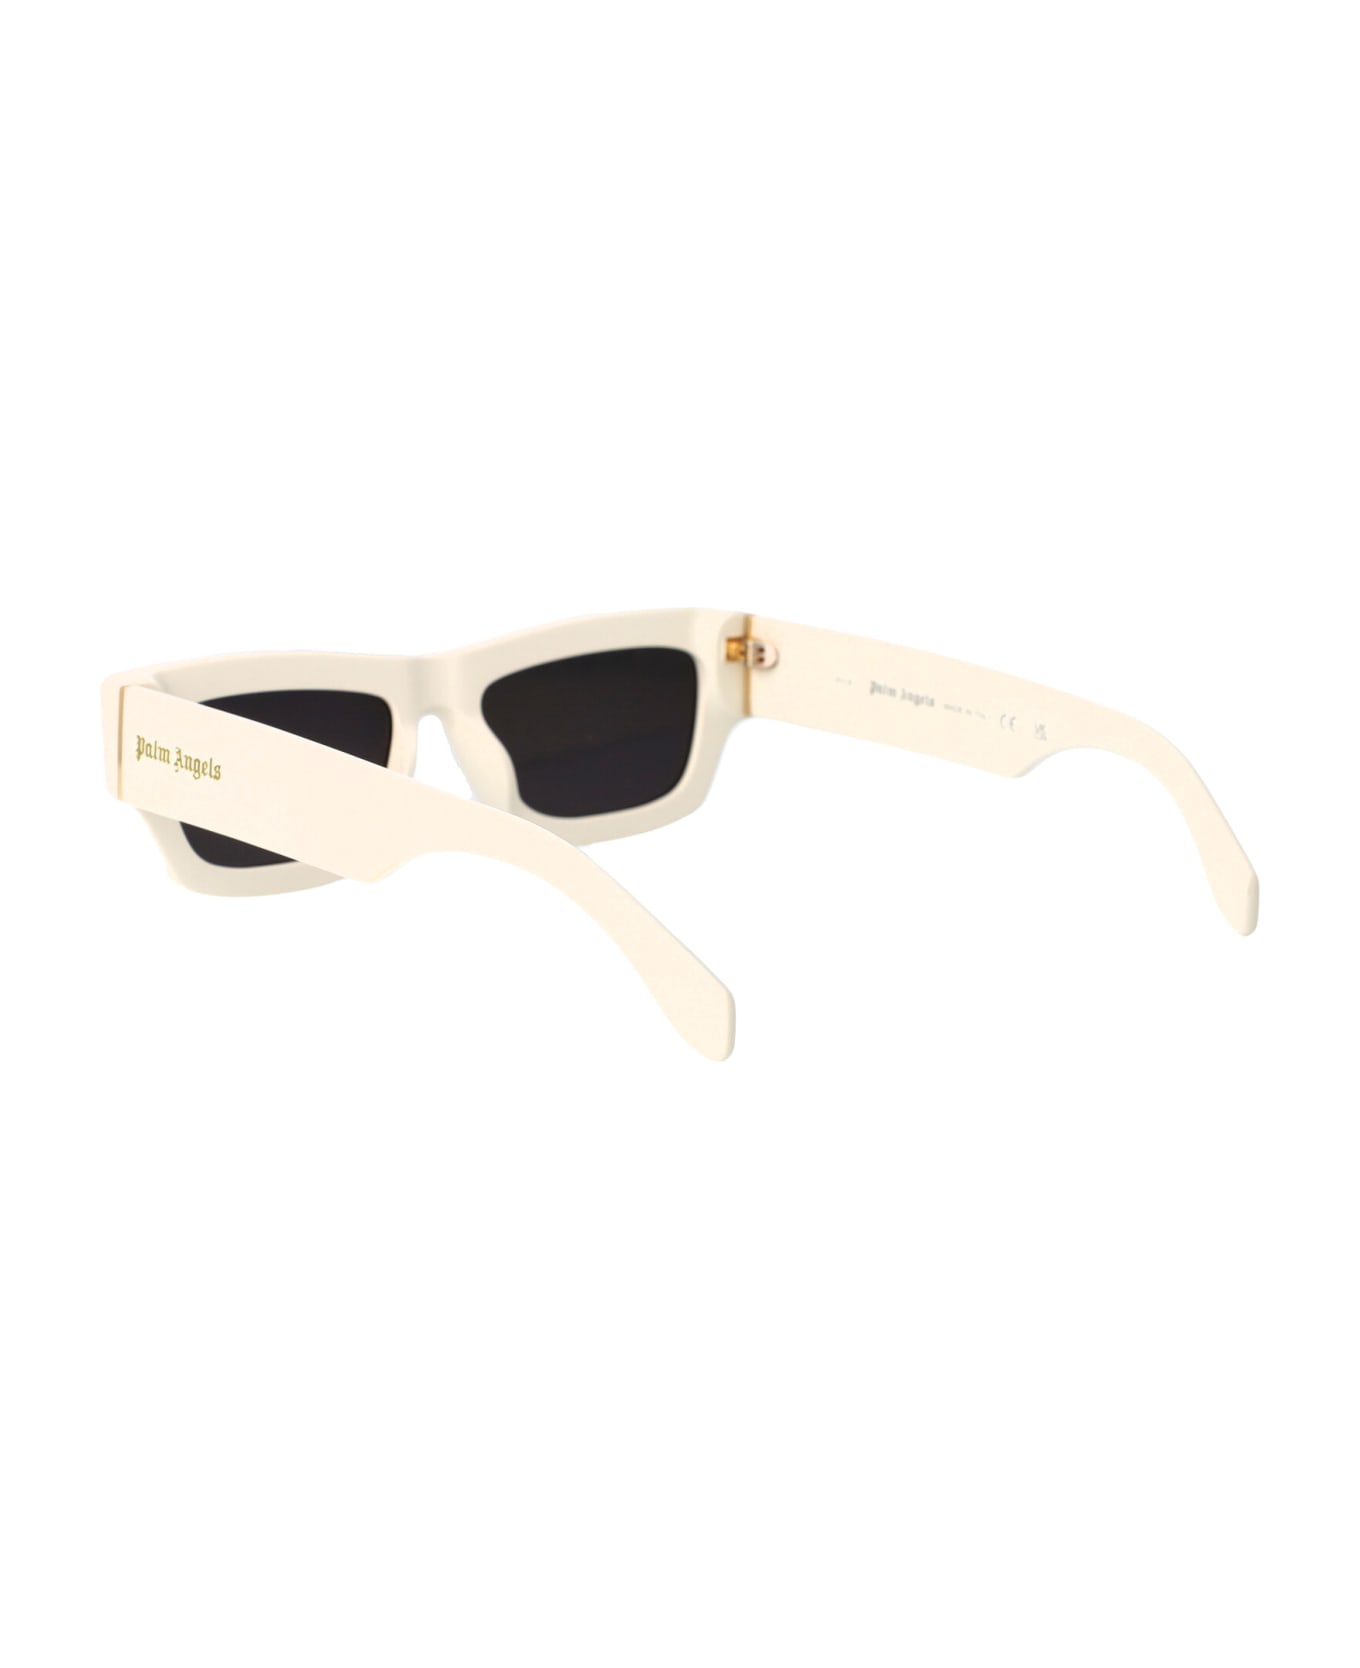 Palm Angels Auberry Sunglasses - 0107 WHITE